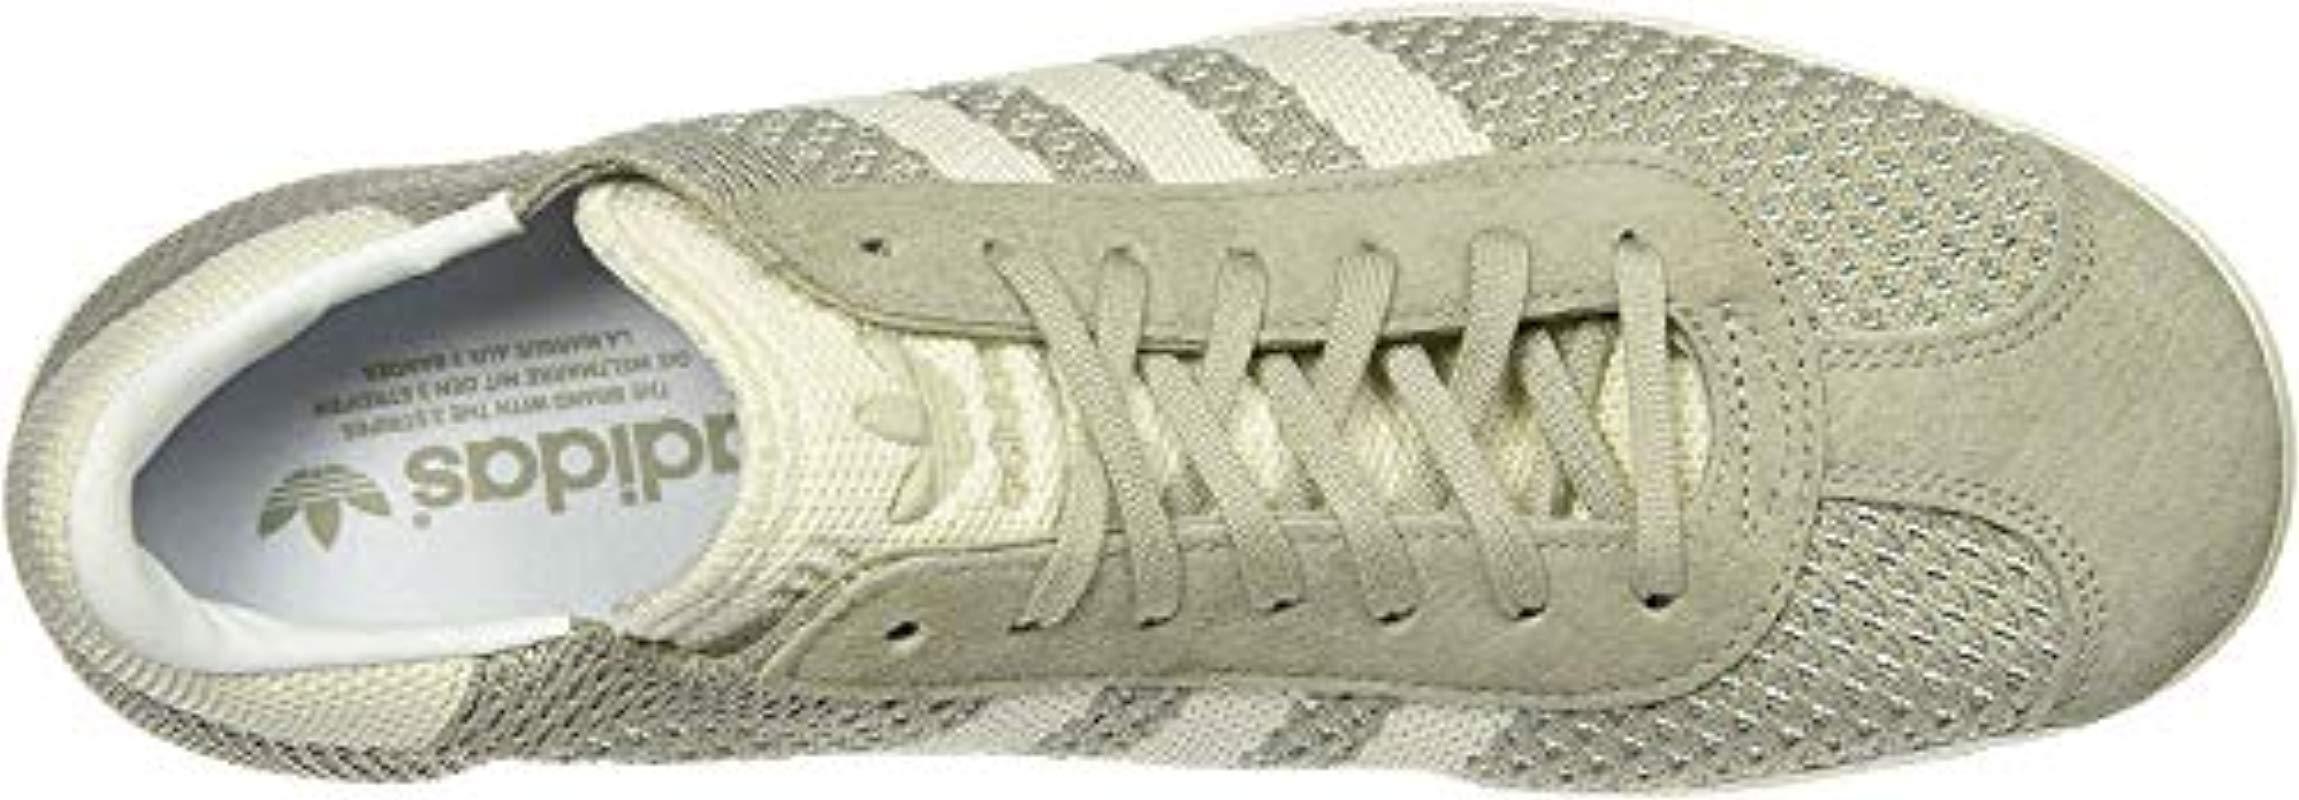 adidas Originals Gazelle Primeknit Sneaker for Men - Save 69% - Lyst صابون لايف بوي الاصلي